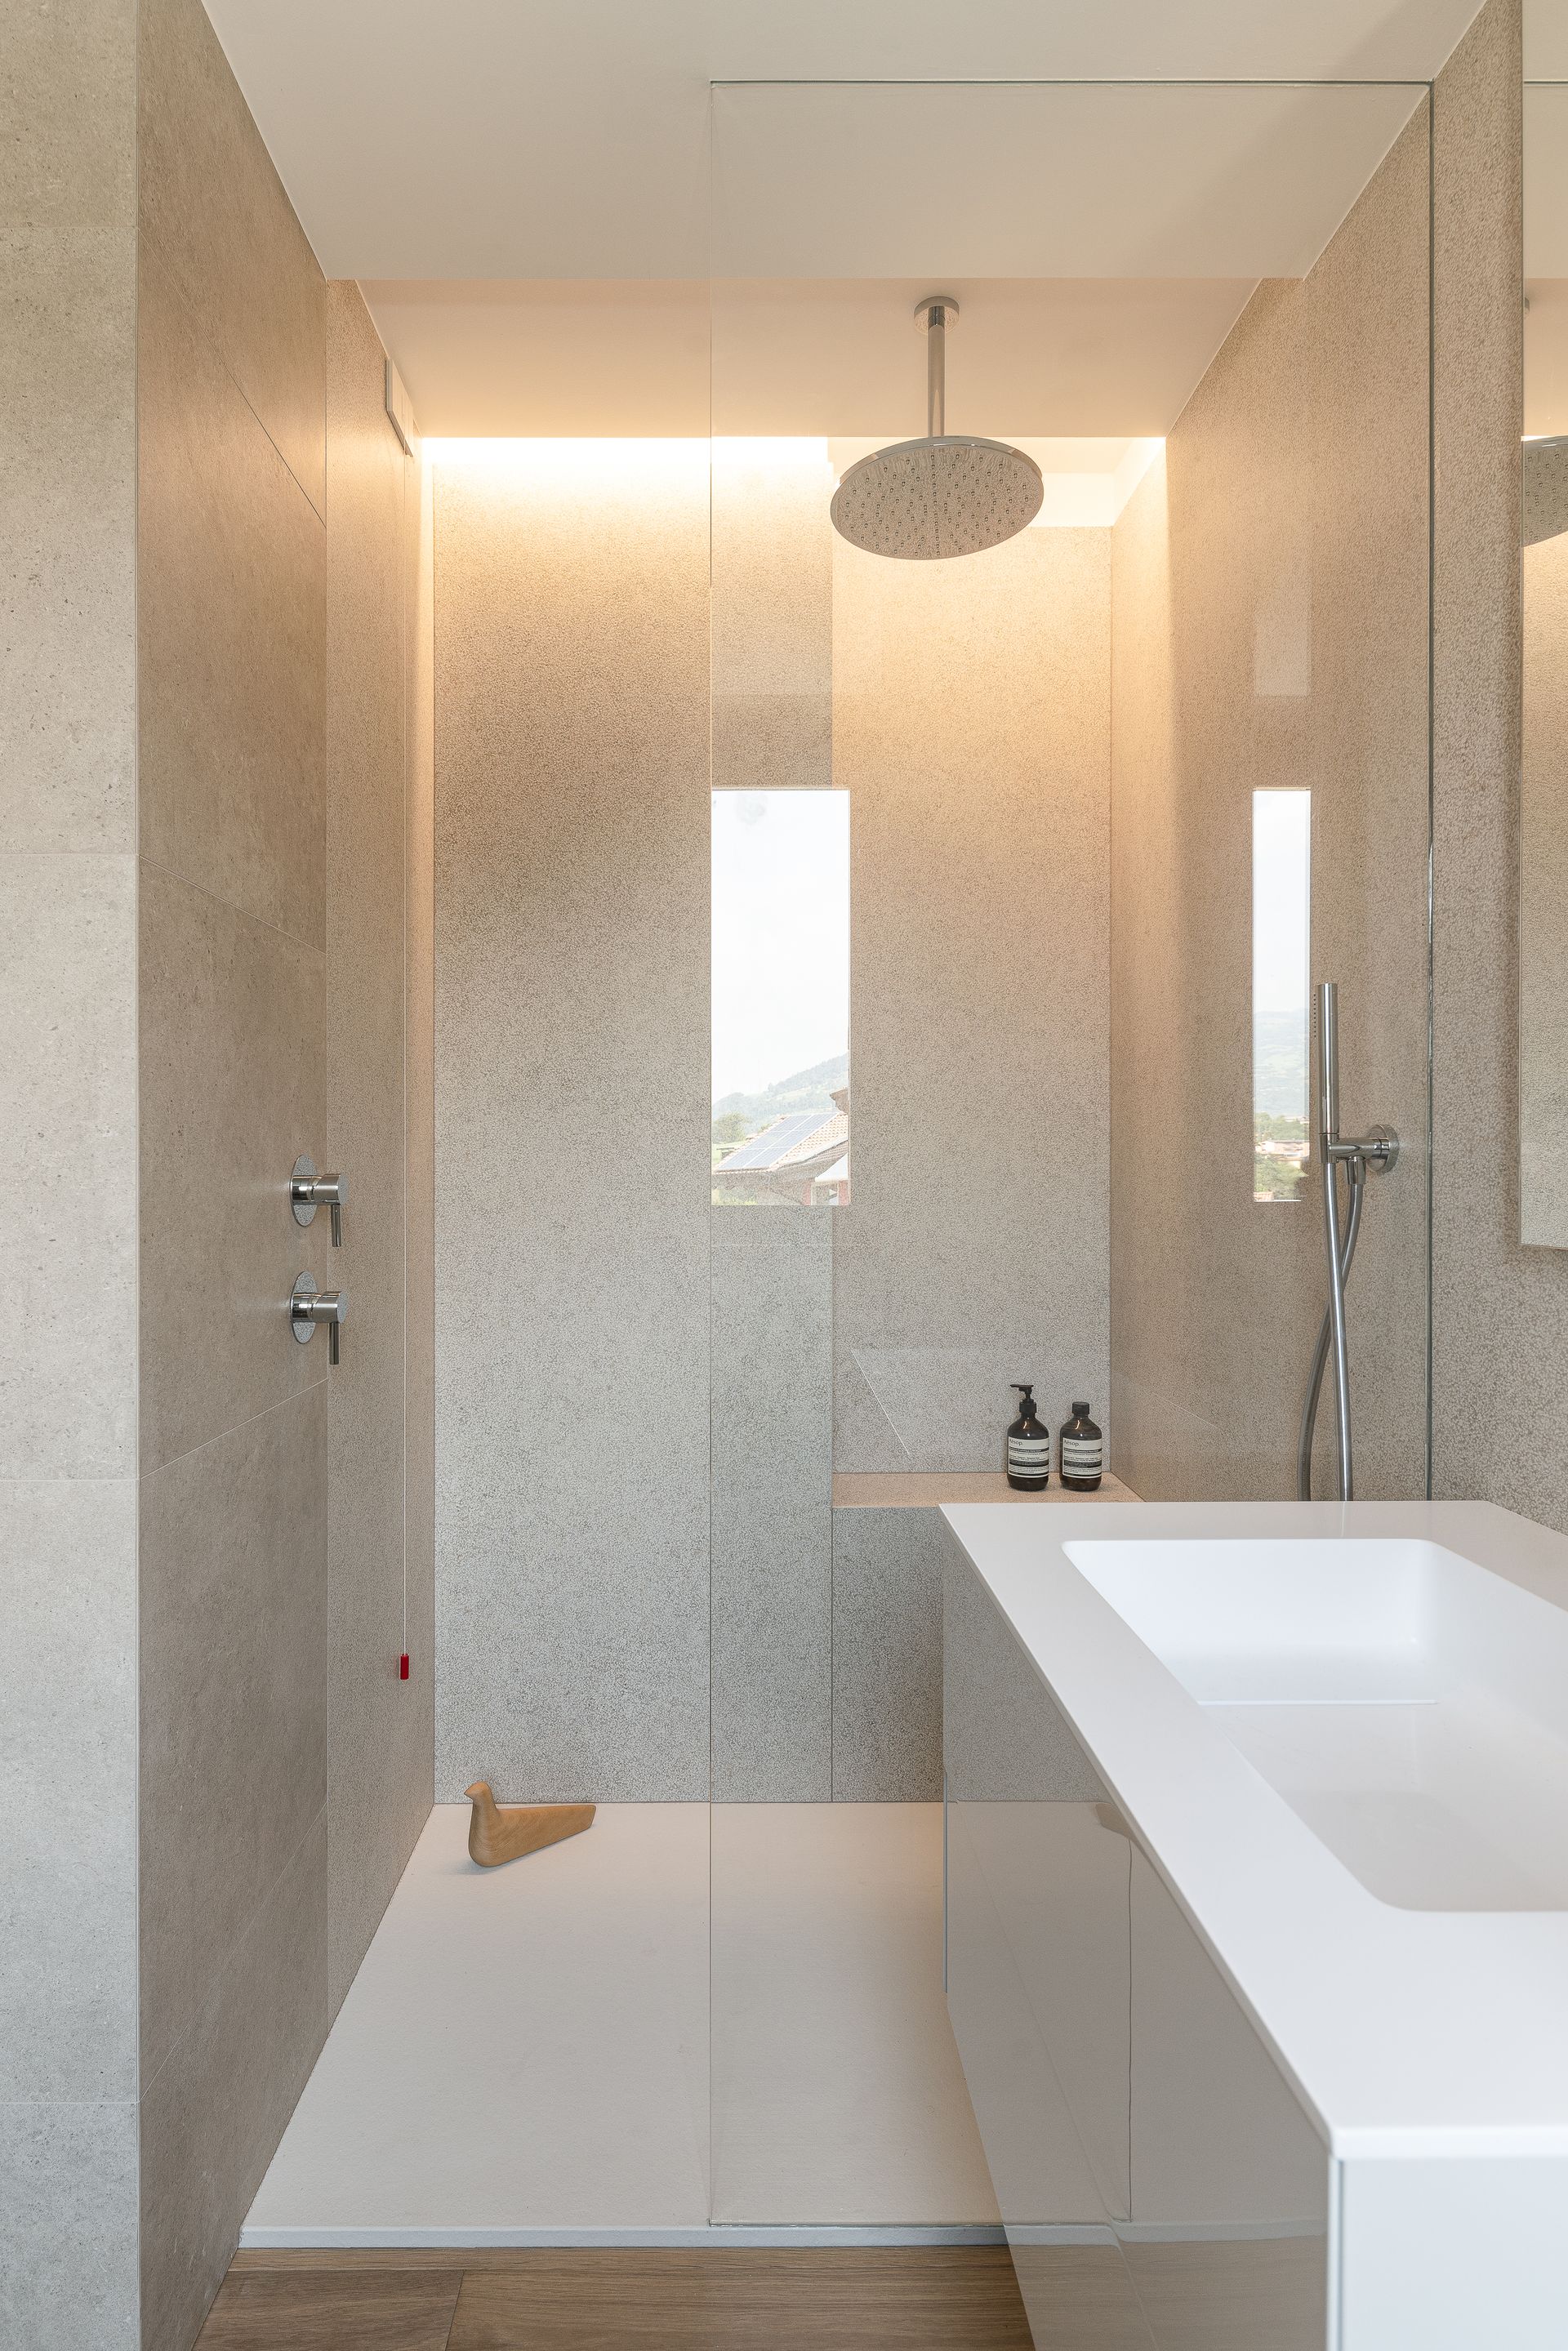 Interior design project, apartment with a view renovation Seriana Valley, Bergamo, Milan, Lake Como, London, New York, Paris. Officina Magisafi architecture design - bathroom